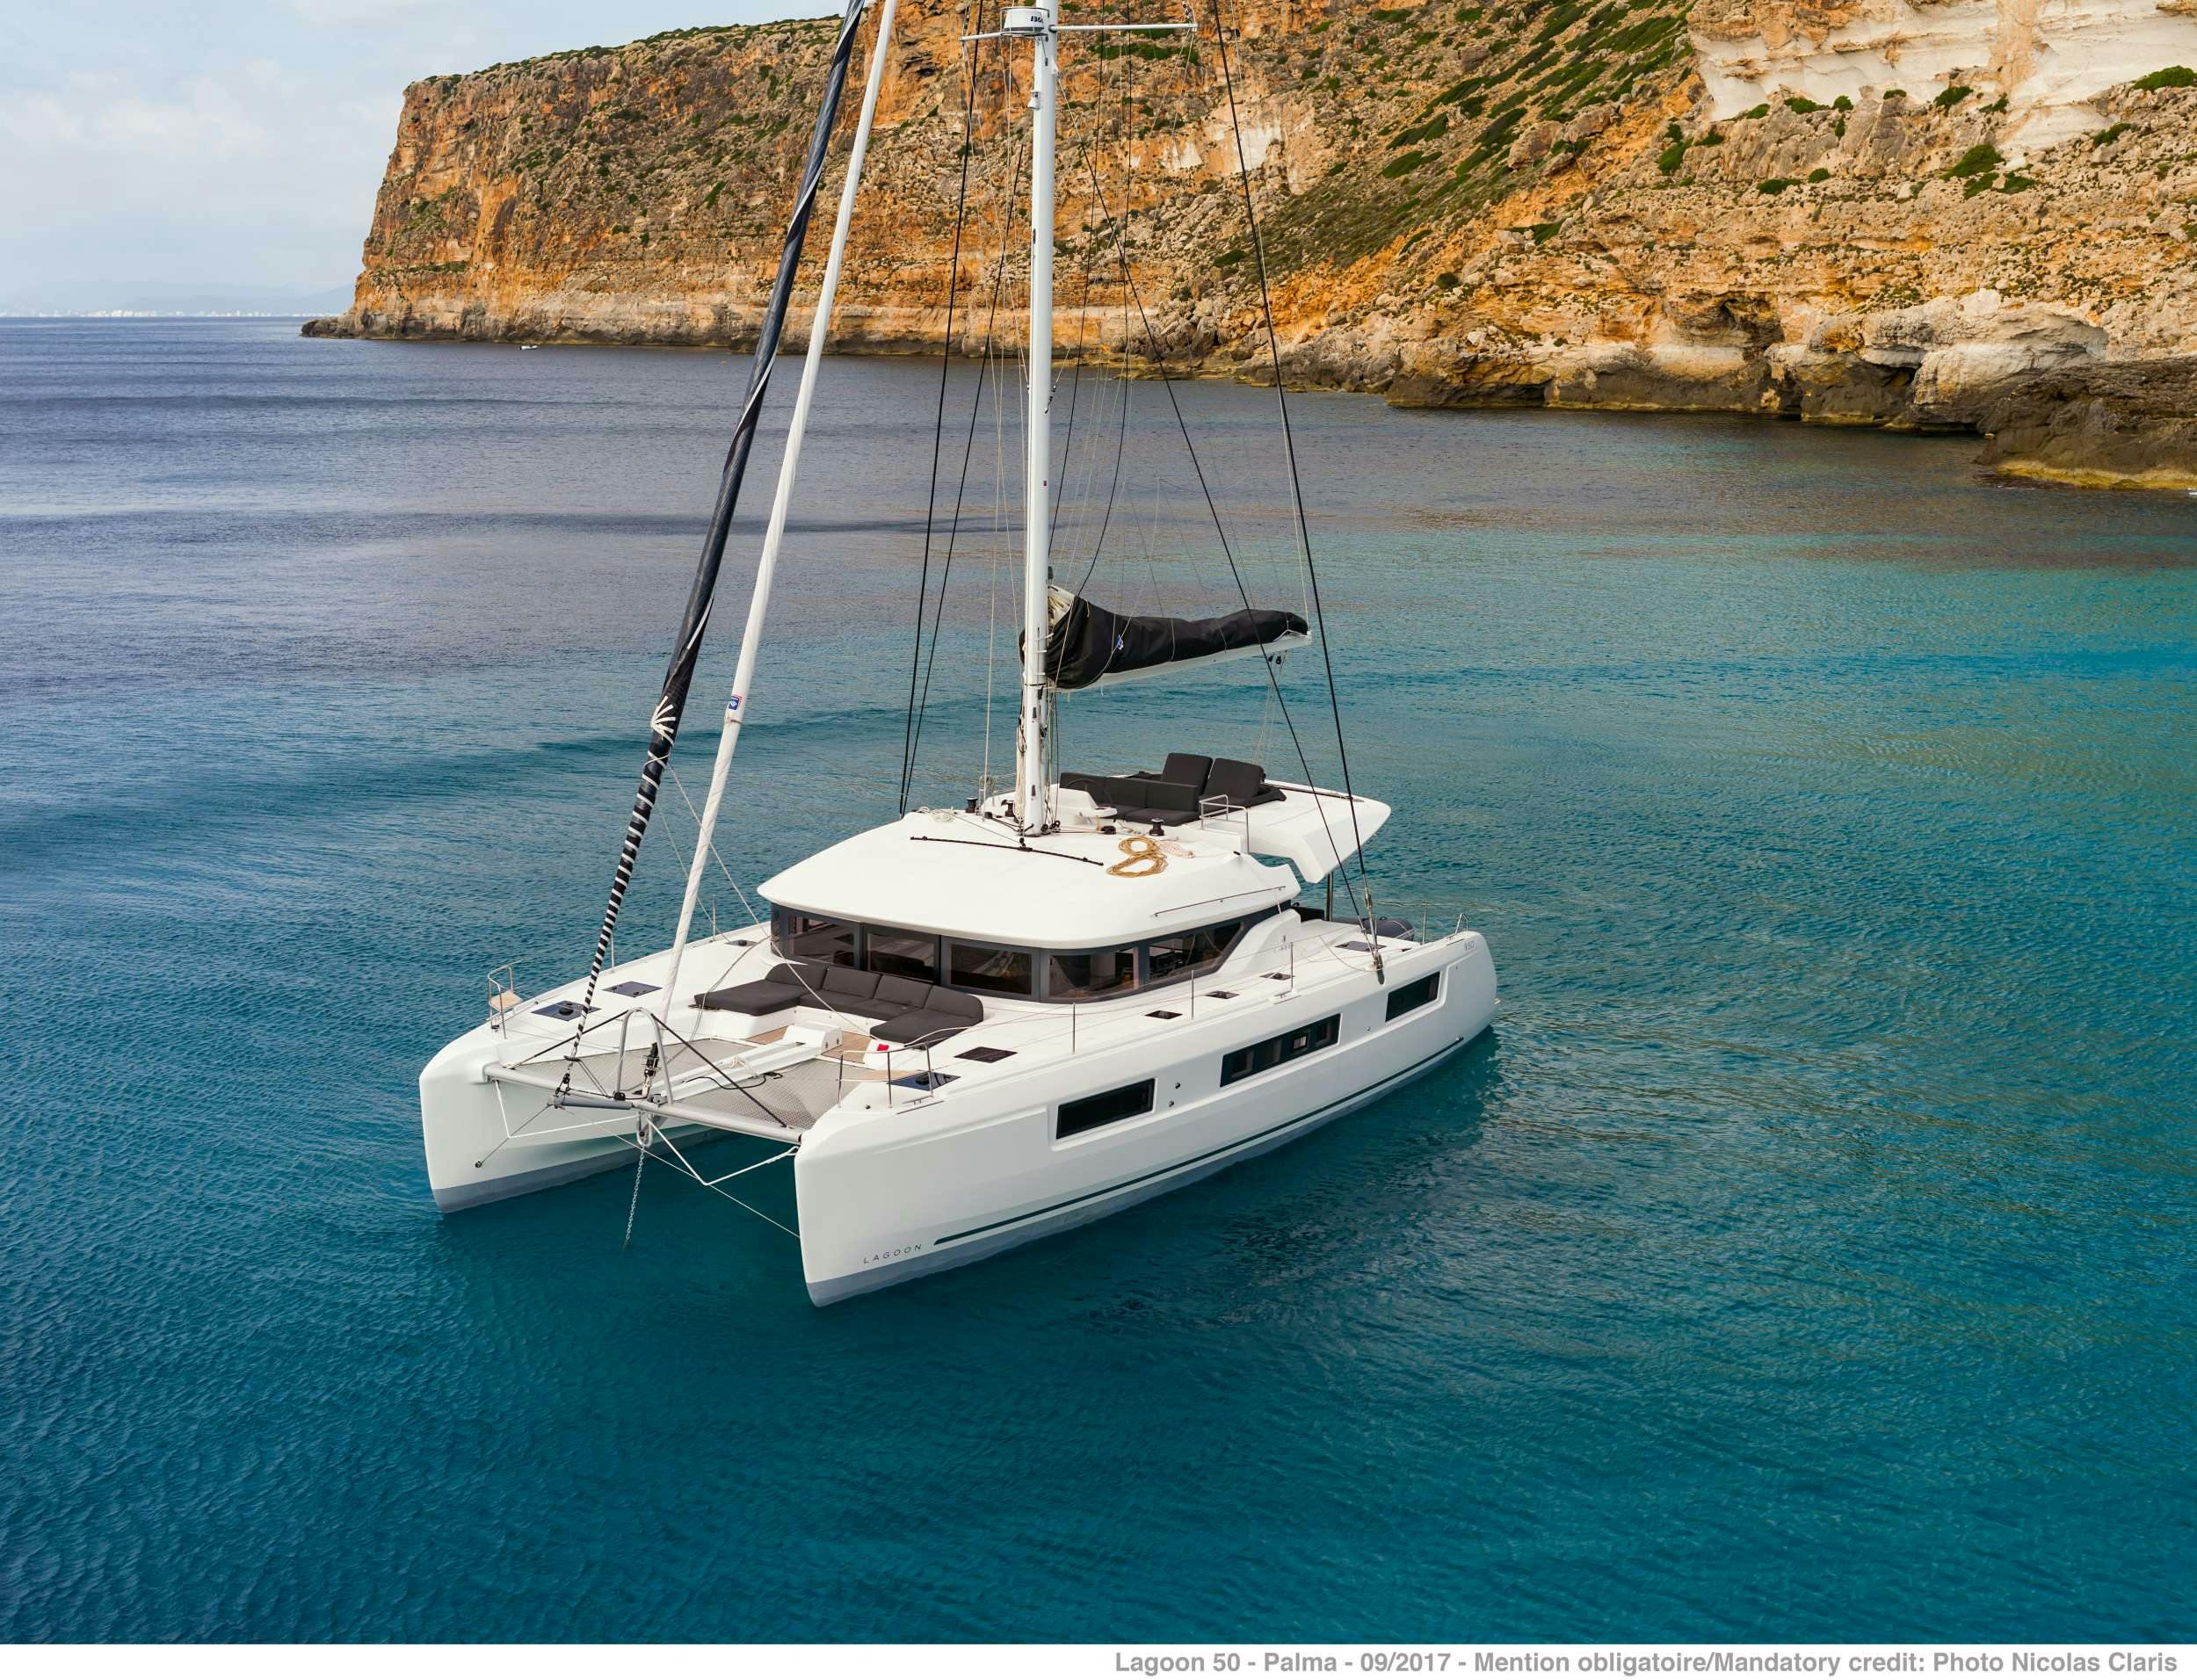 ONEIDA 2 - Yacht Charter Lefkada & Boat hire in Greece 1